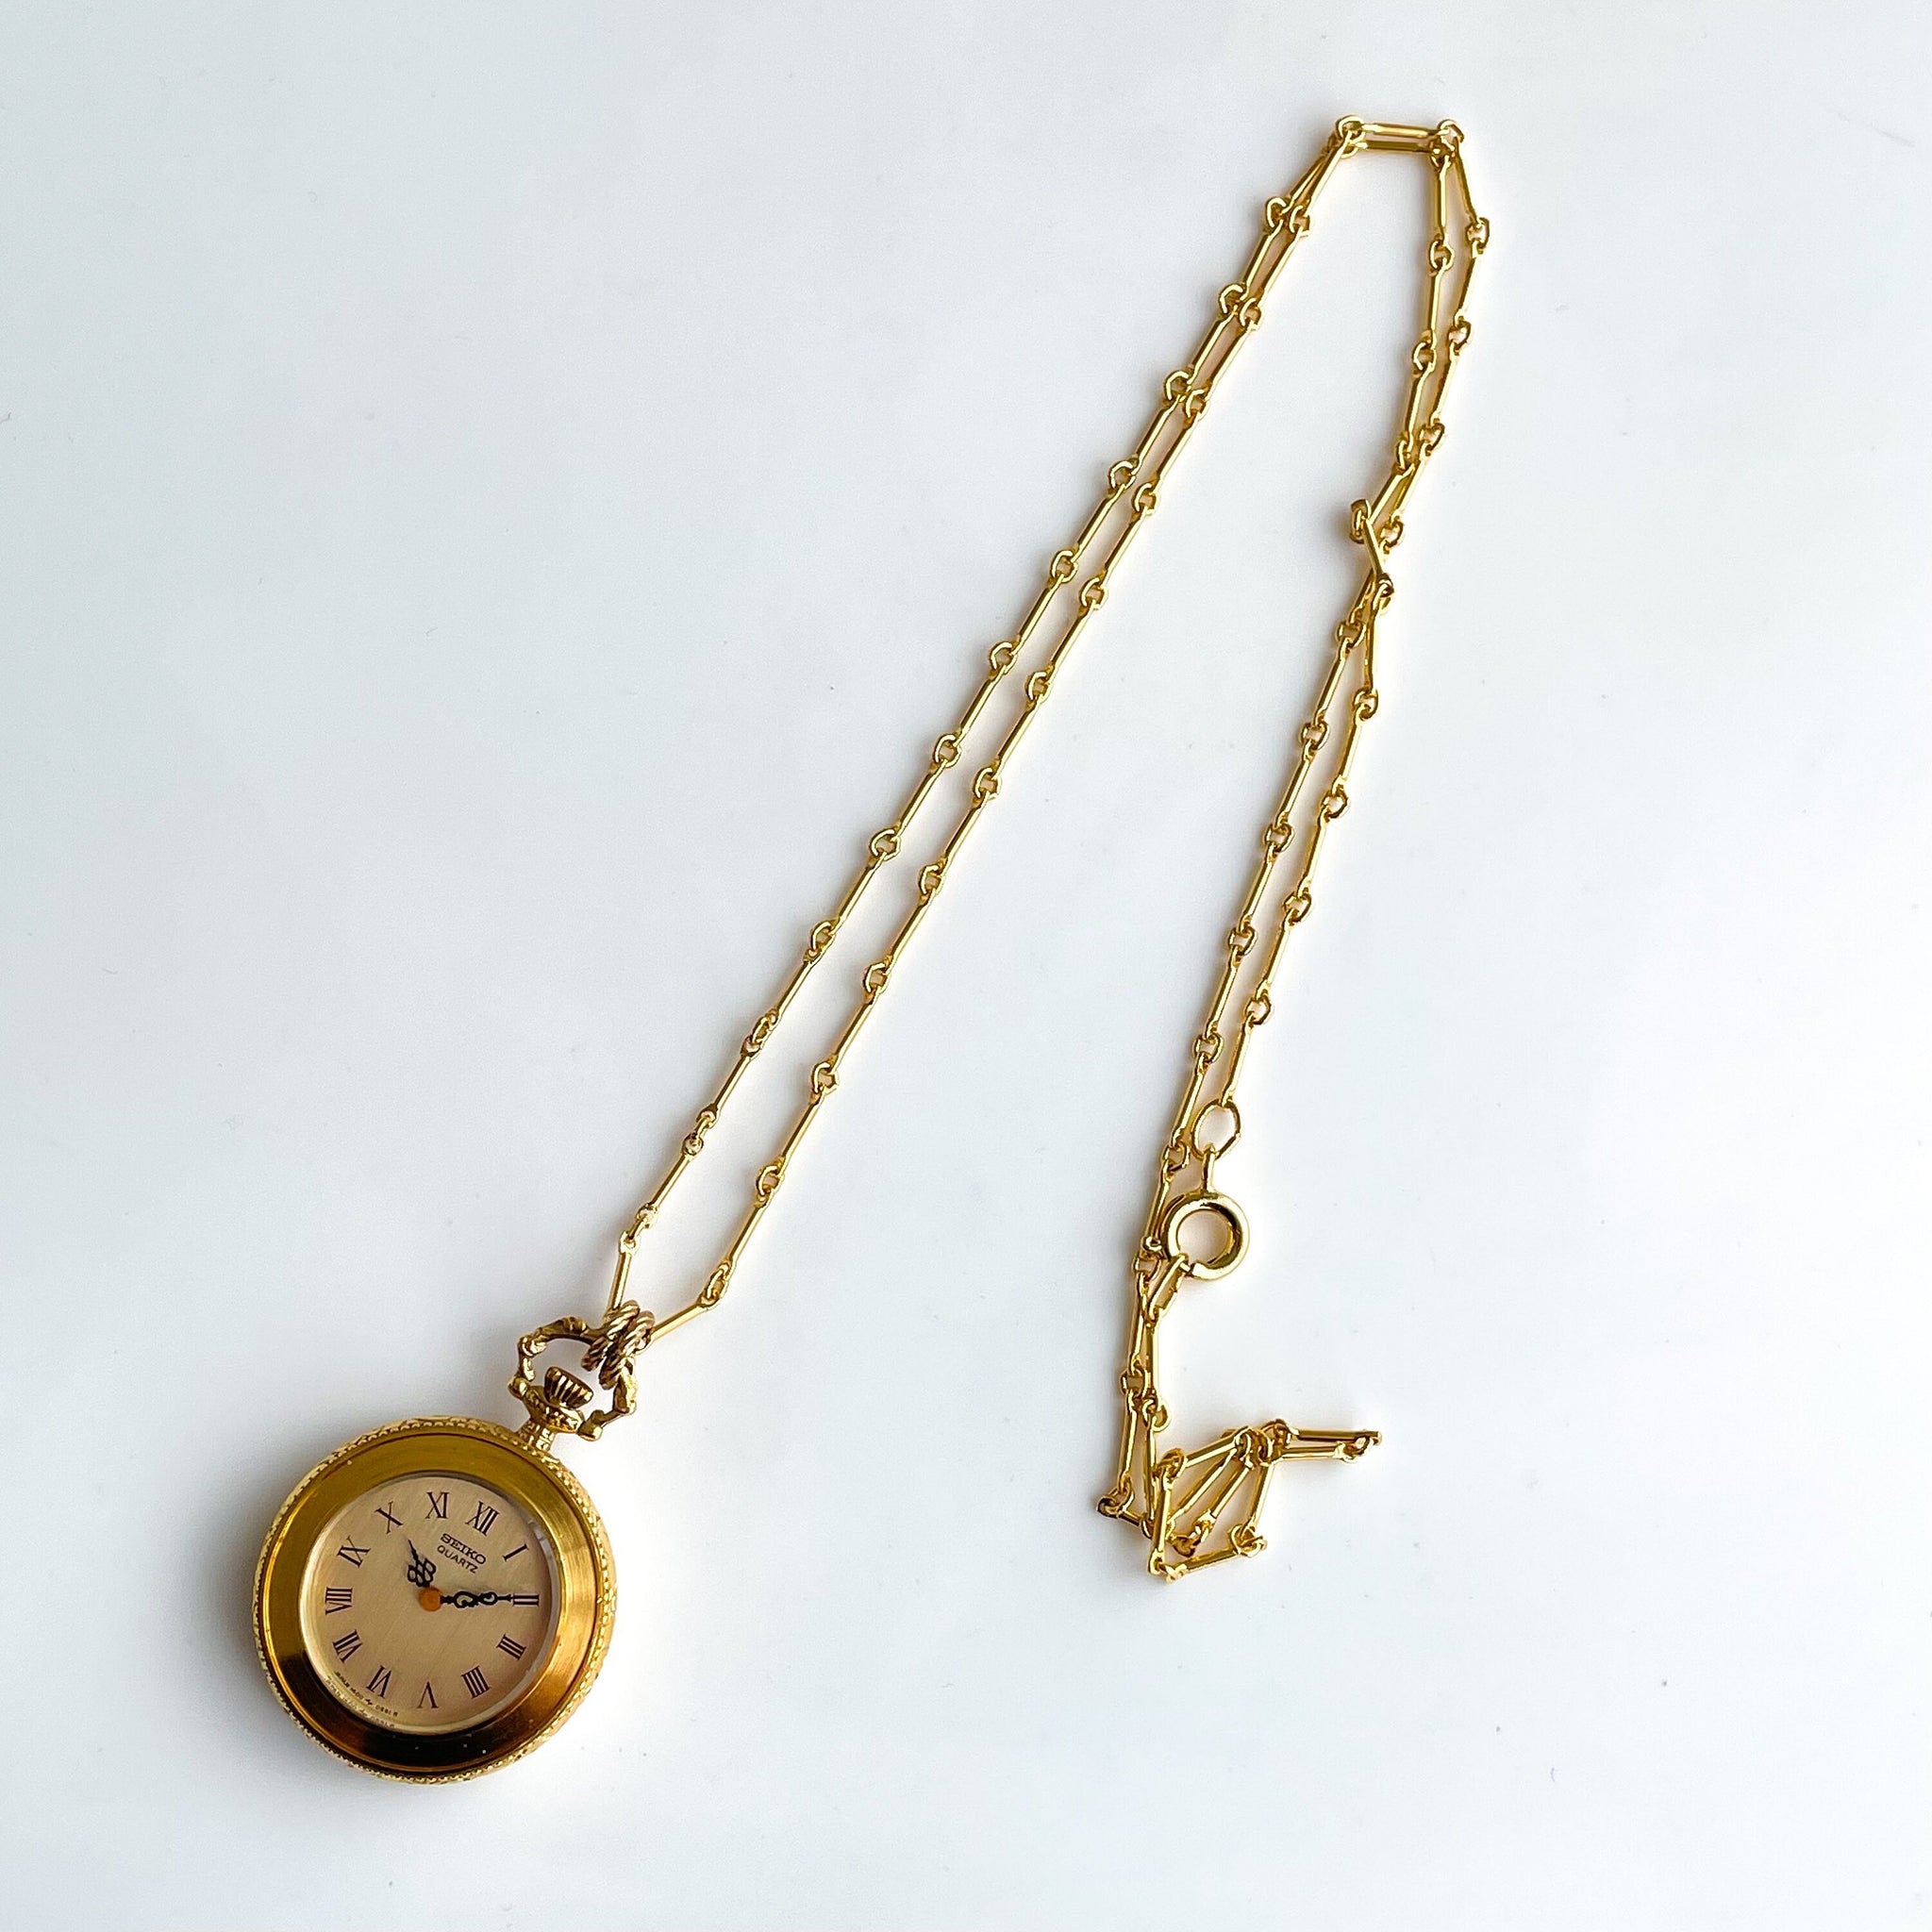 Seiko Matching Ladies Watch Necklace Gift Set | eBay